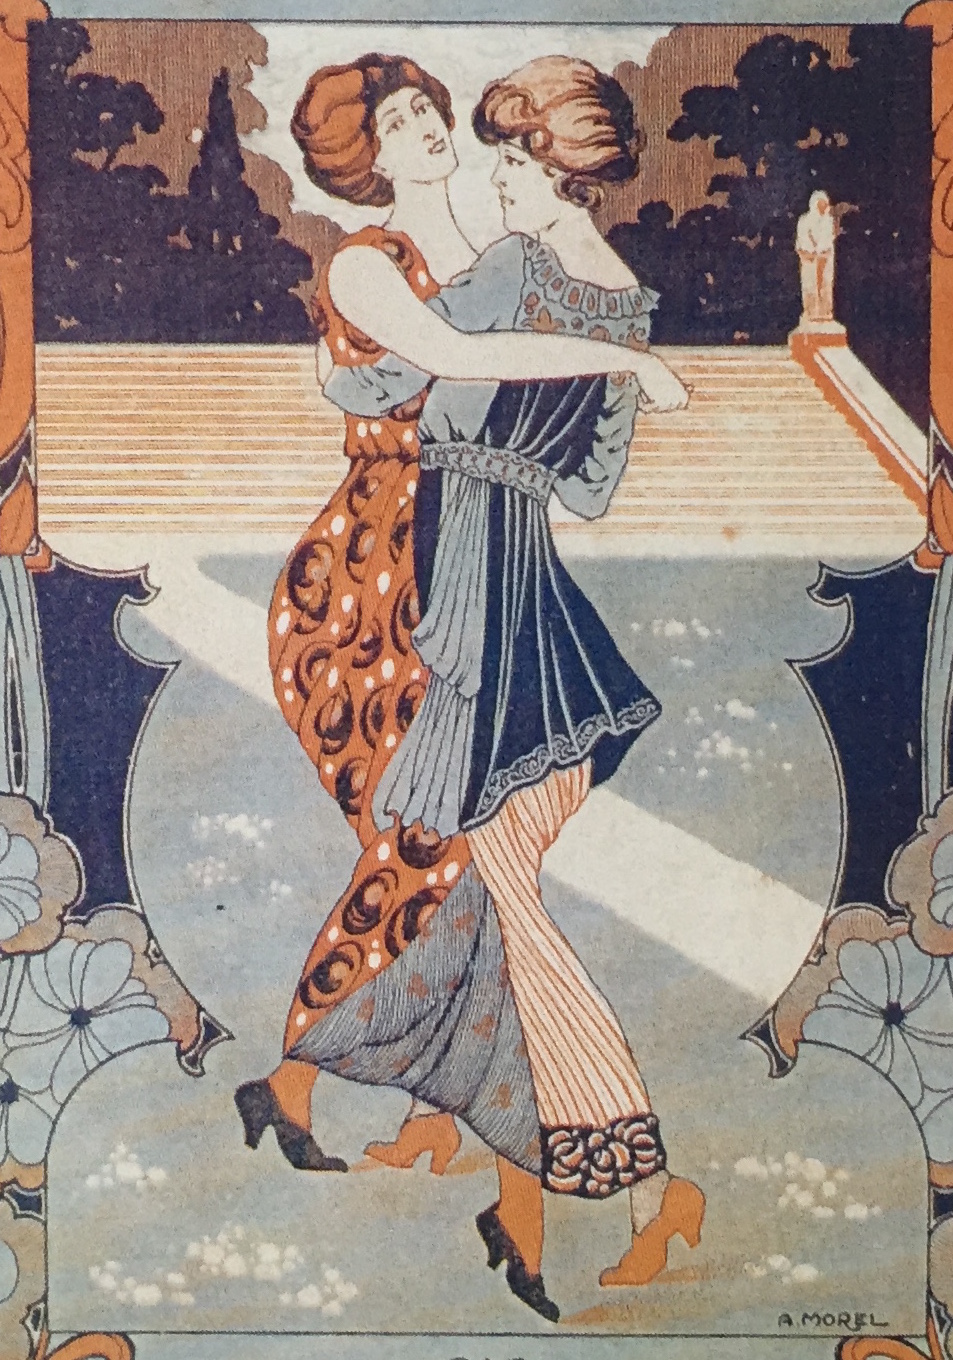 Fashionable women on Villoldo sheet music, London and Paris, 1913-14